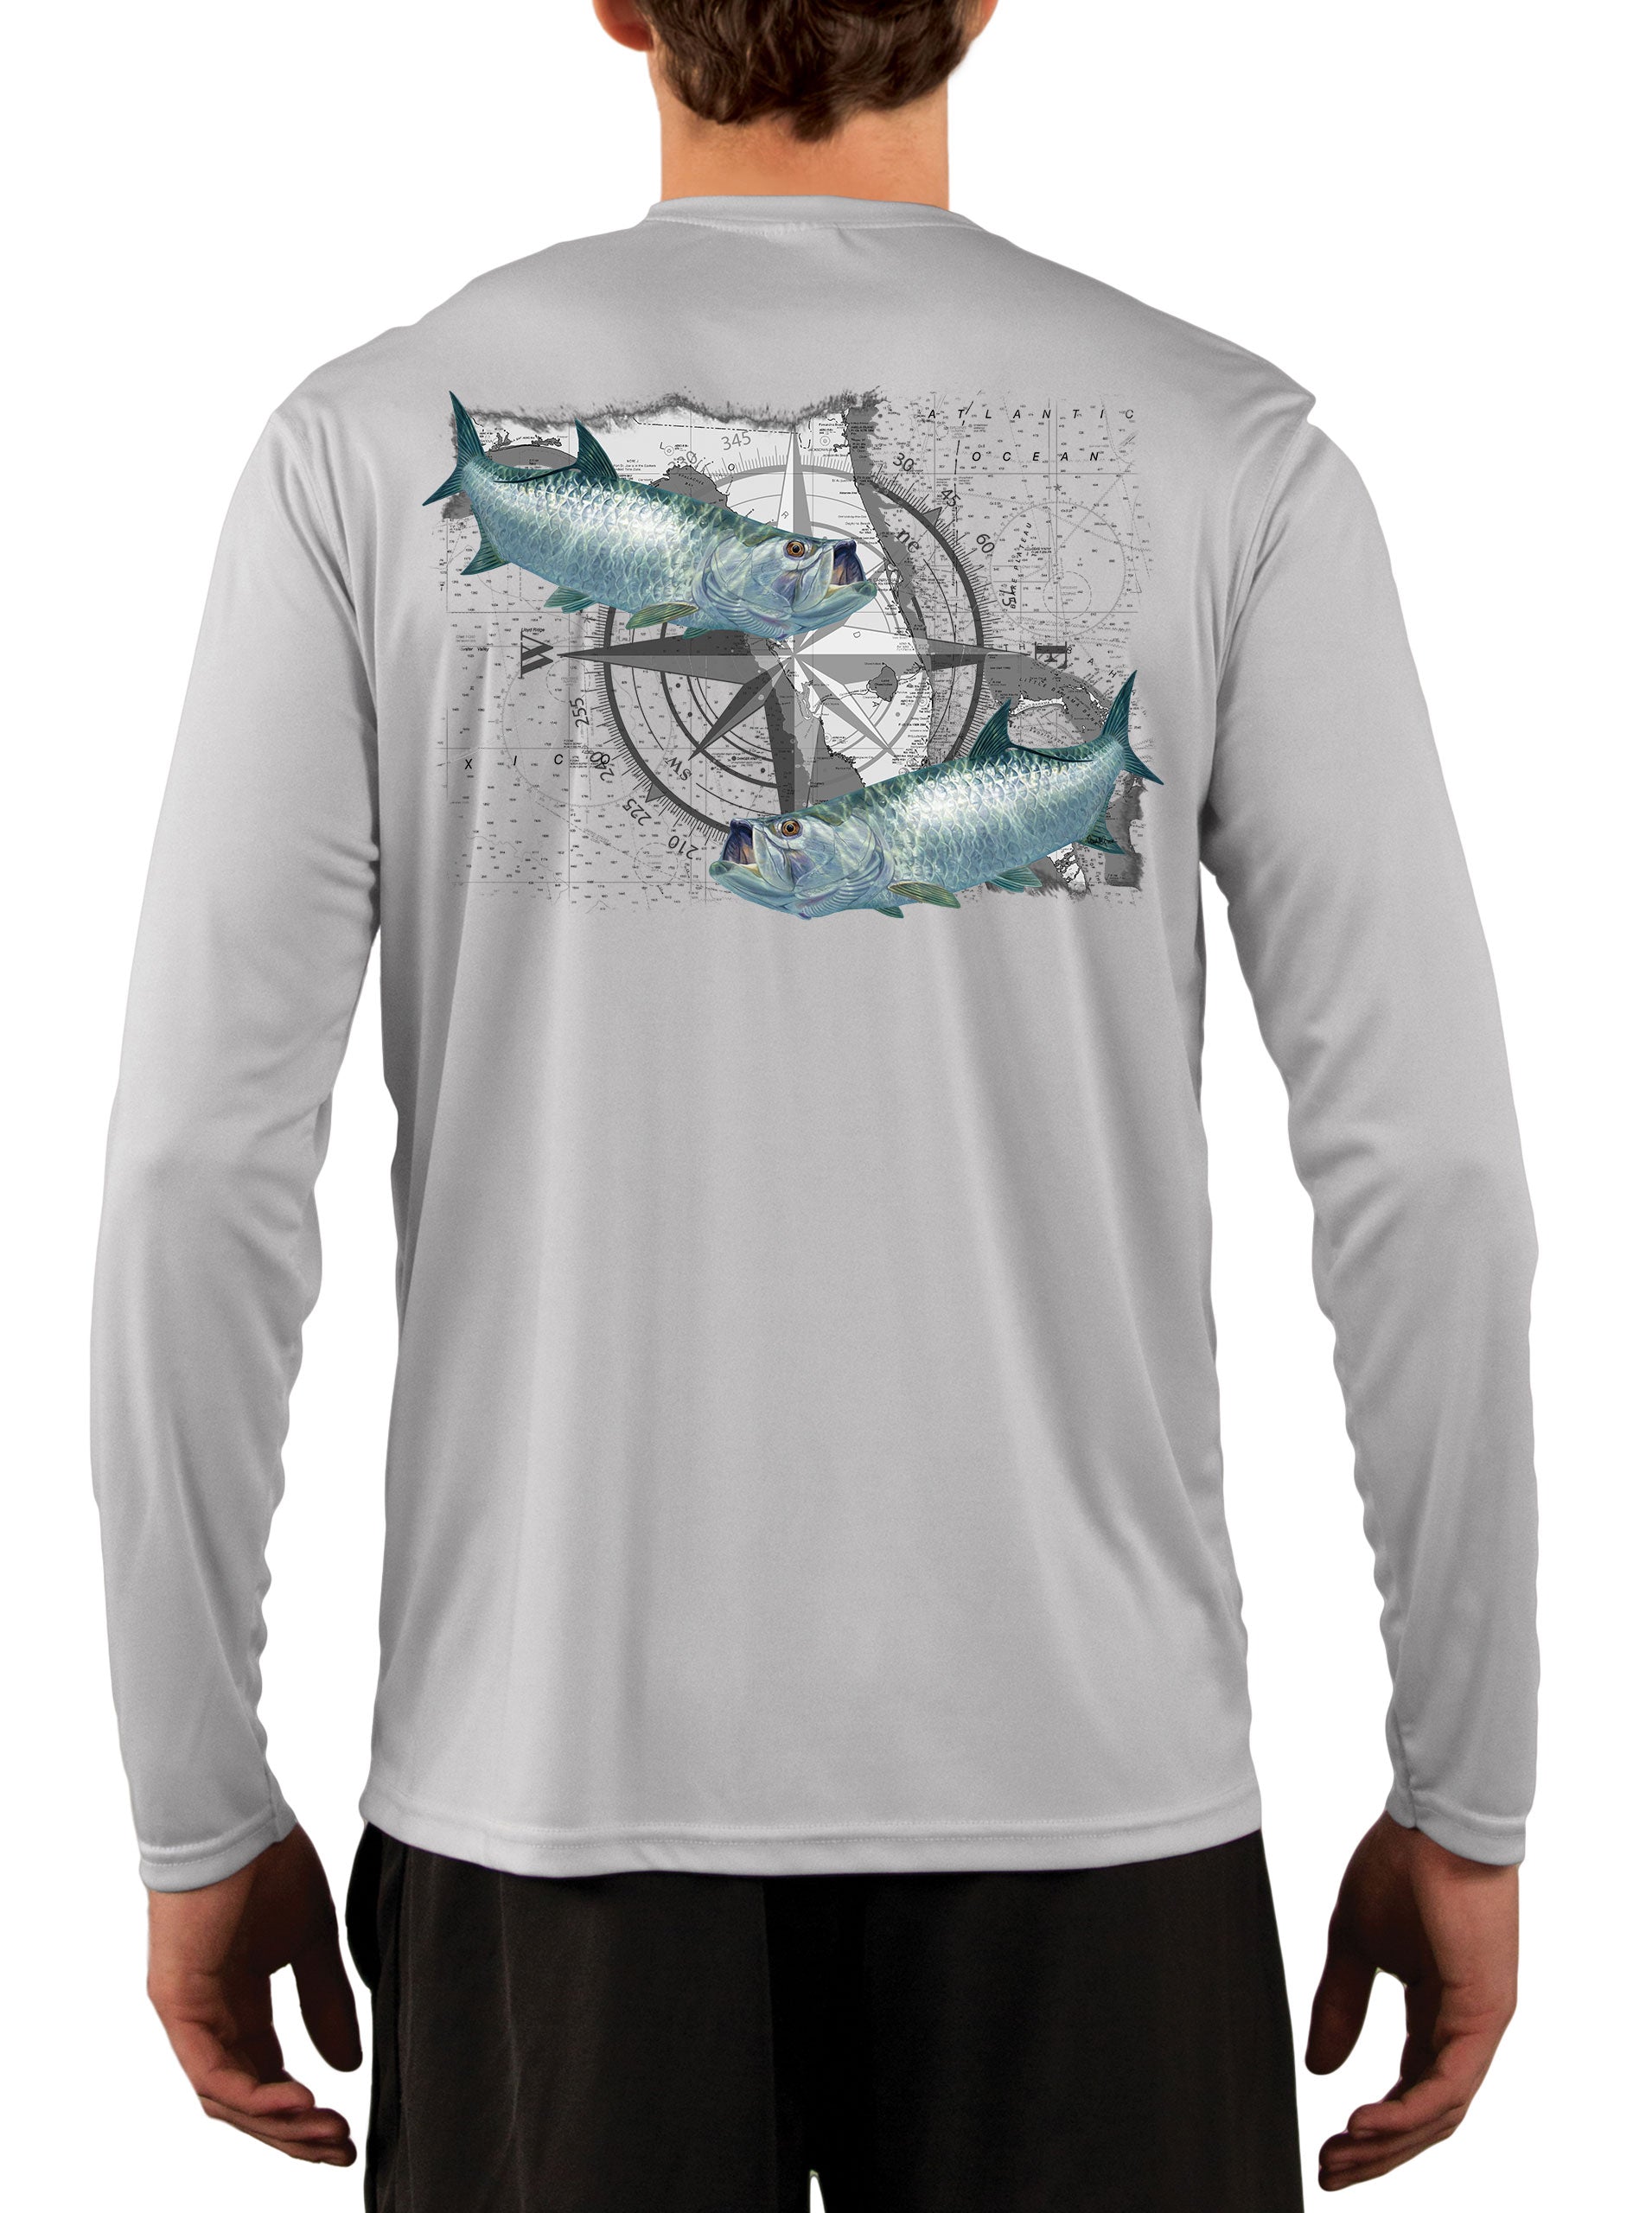 Tech Fishing Shirt Tackle Box Graphite